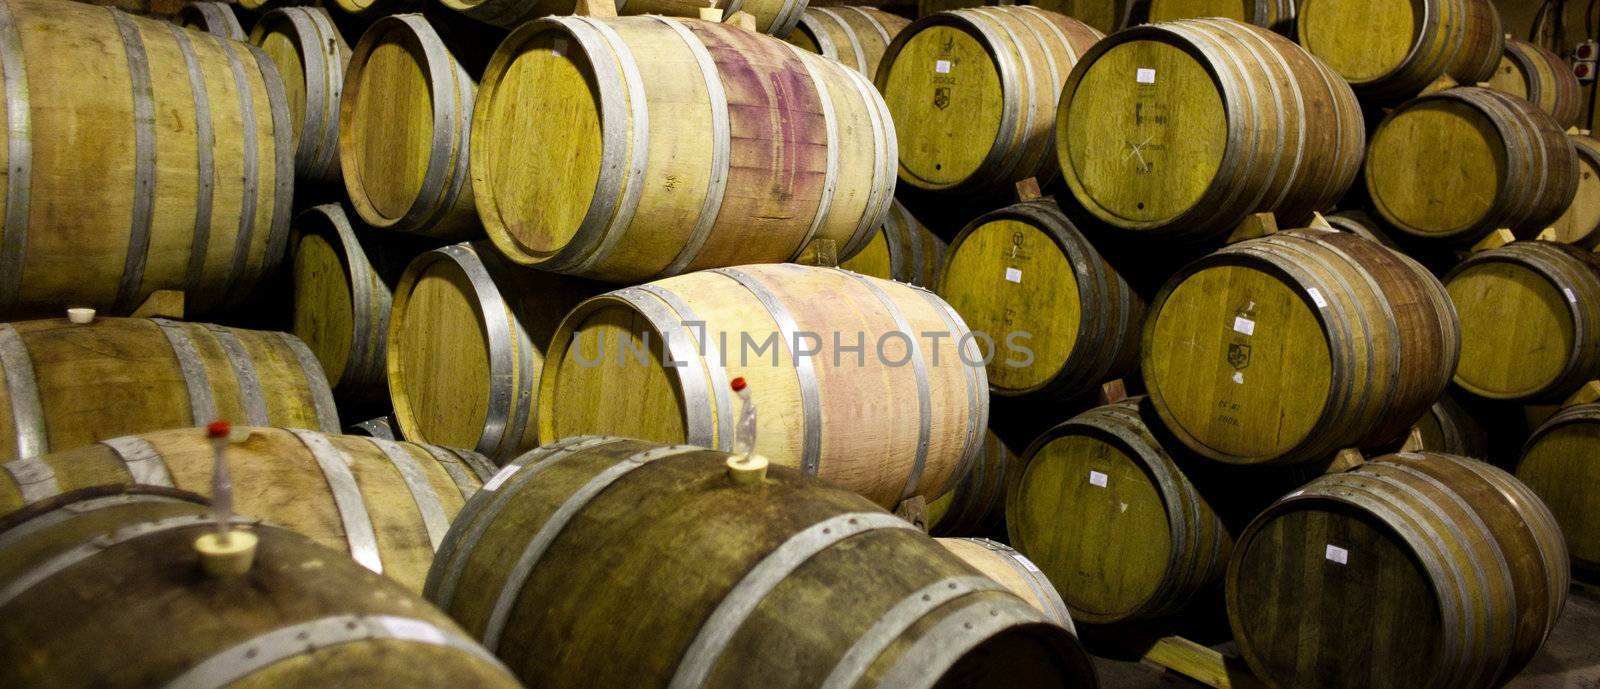 Wine barrels by edan